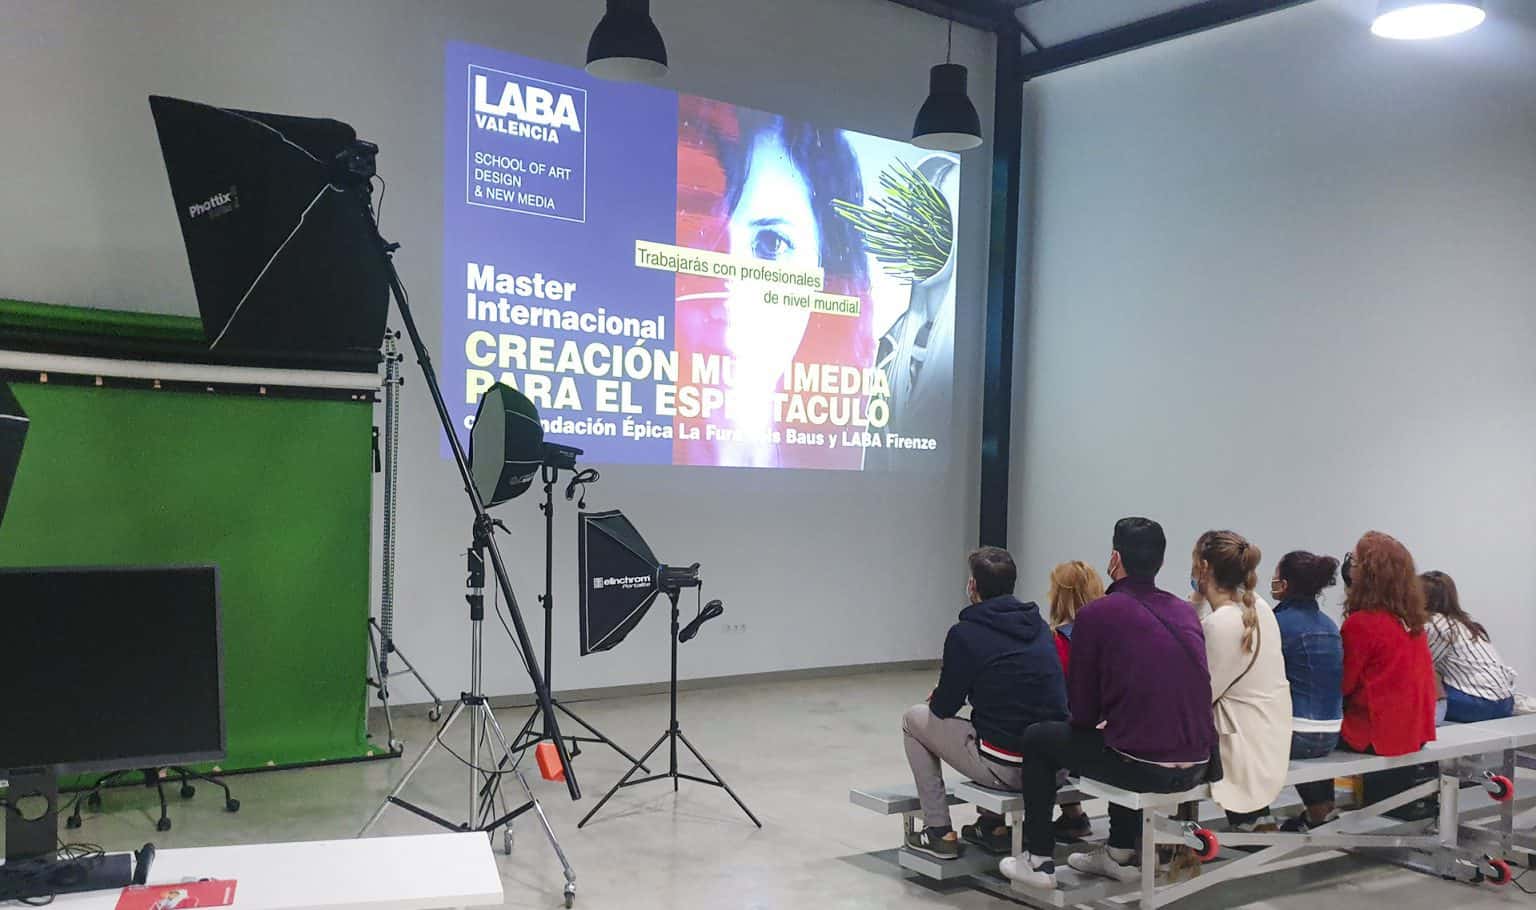 LABA Valencia. School of Art Design and New Media